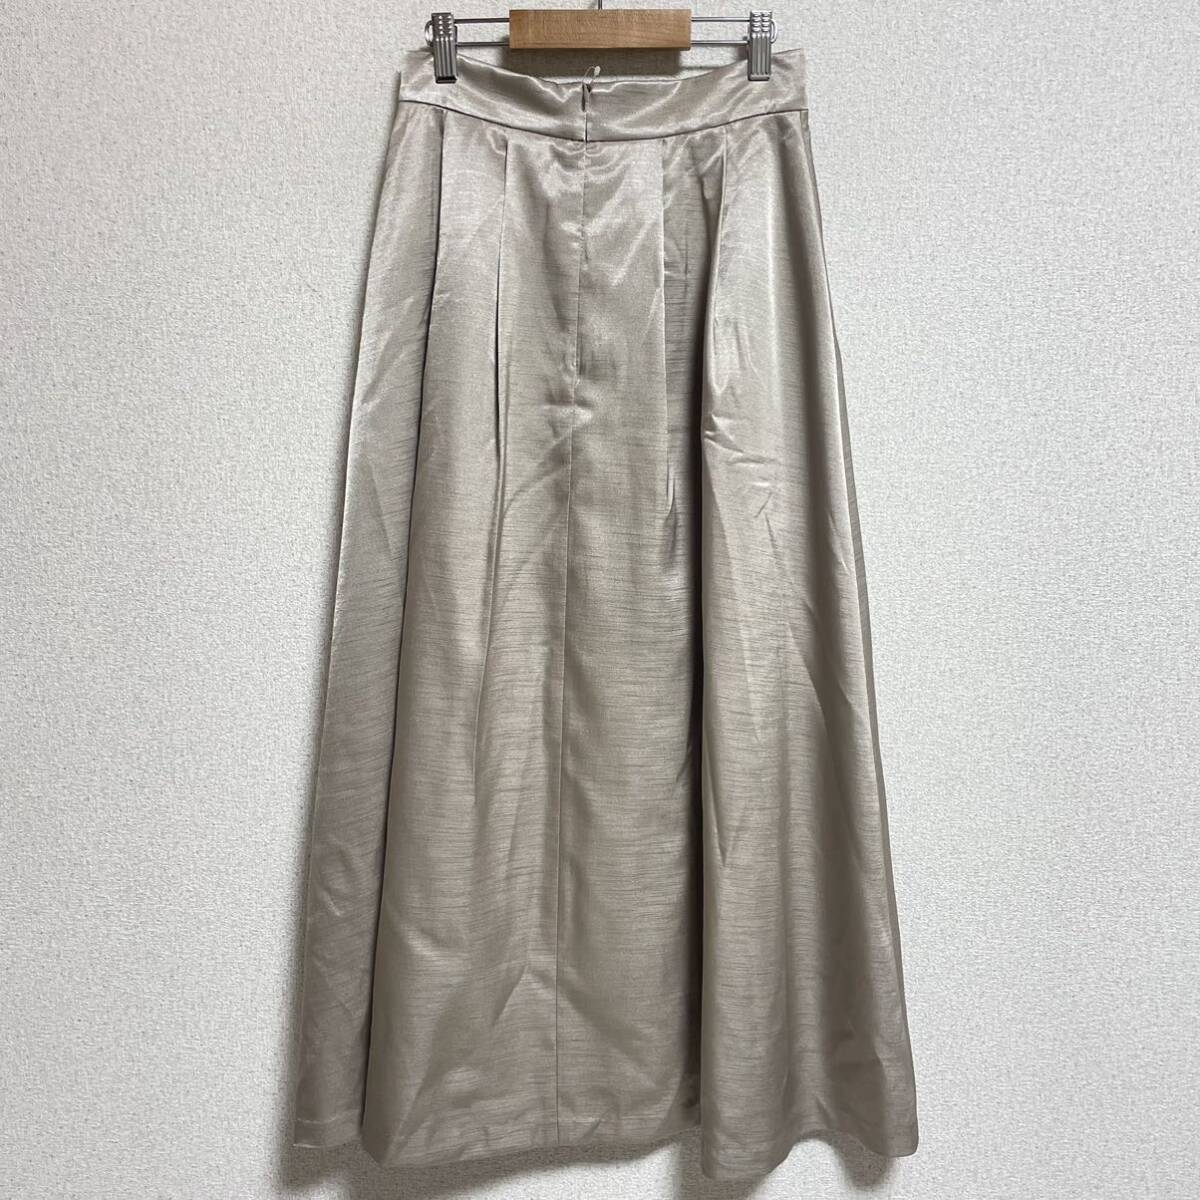 [ с биркой /¥11990-]NATURAL BEAUTY BASIC Natural Beauty Basic длинная юбка юбка-трапеция атлас бежевый размер S *23